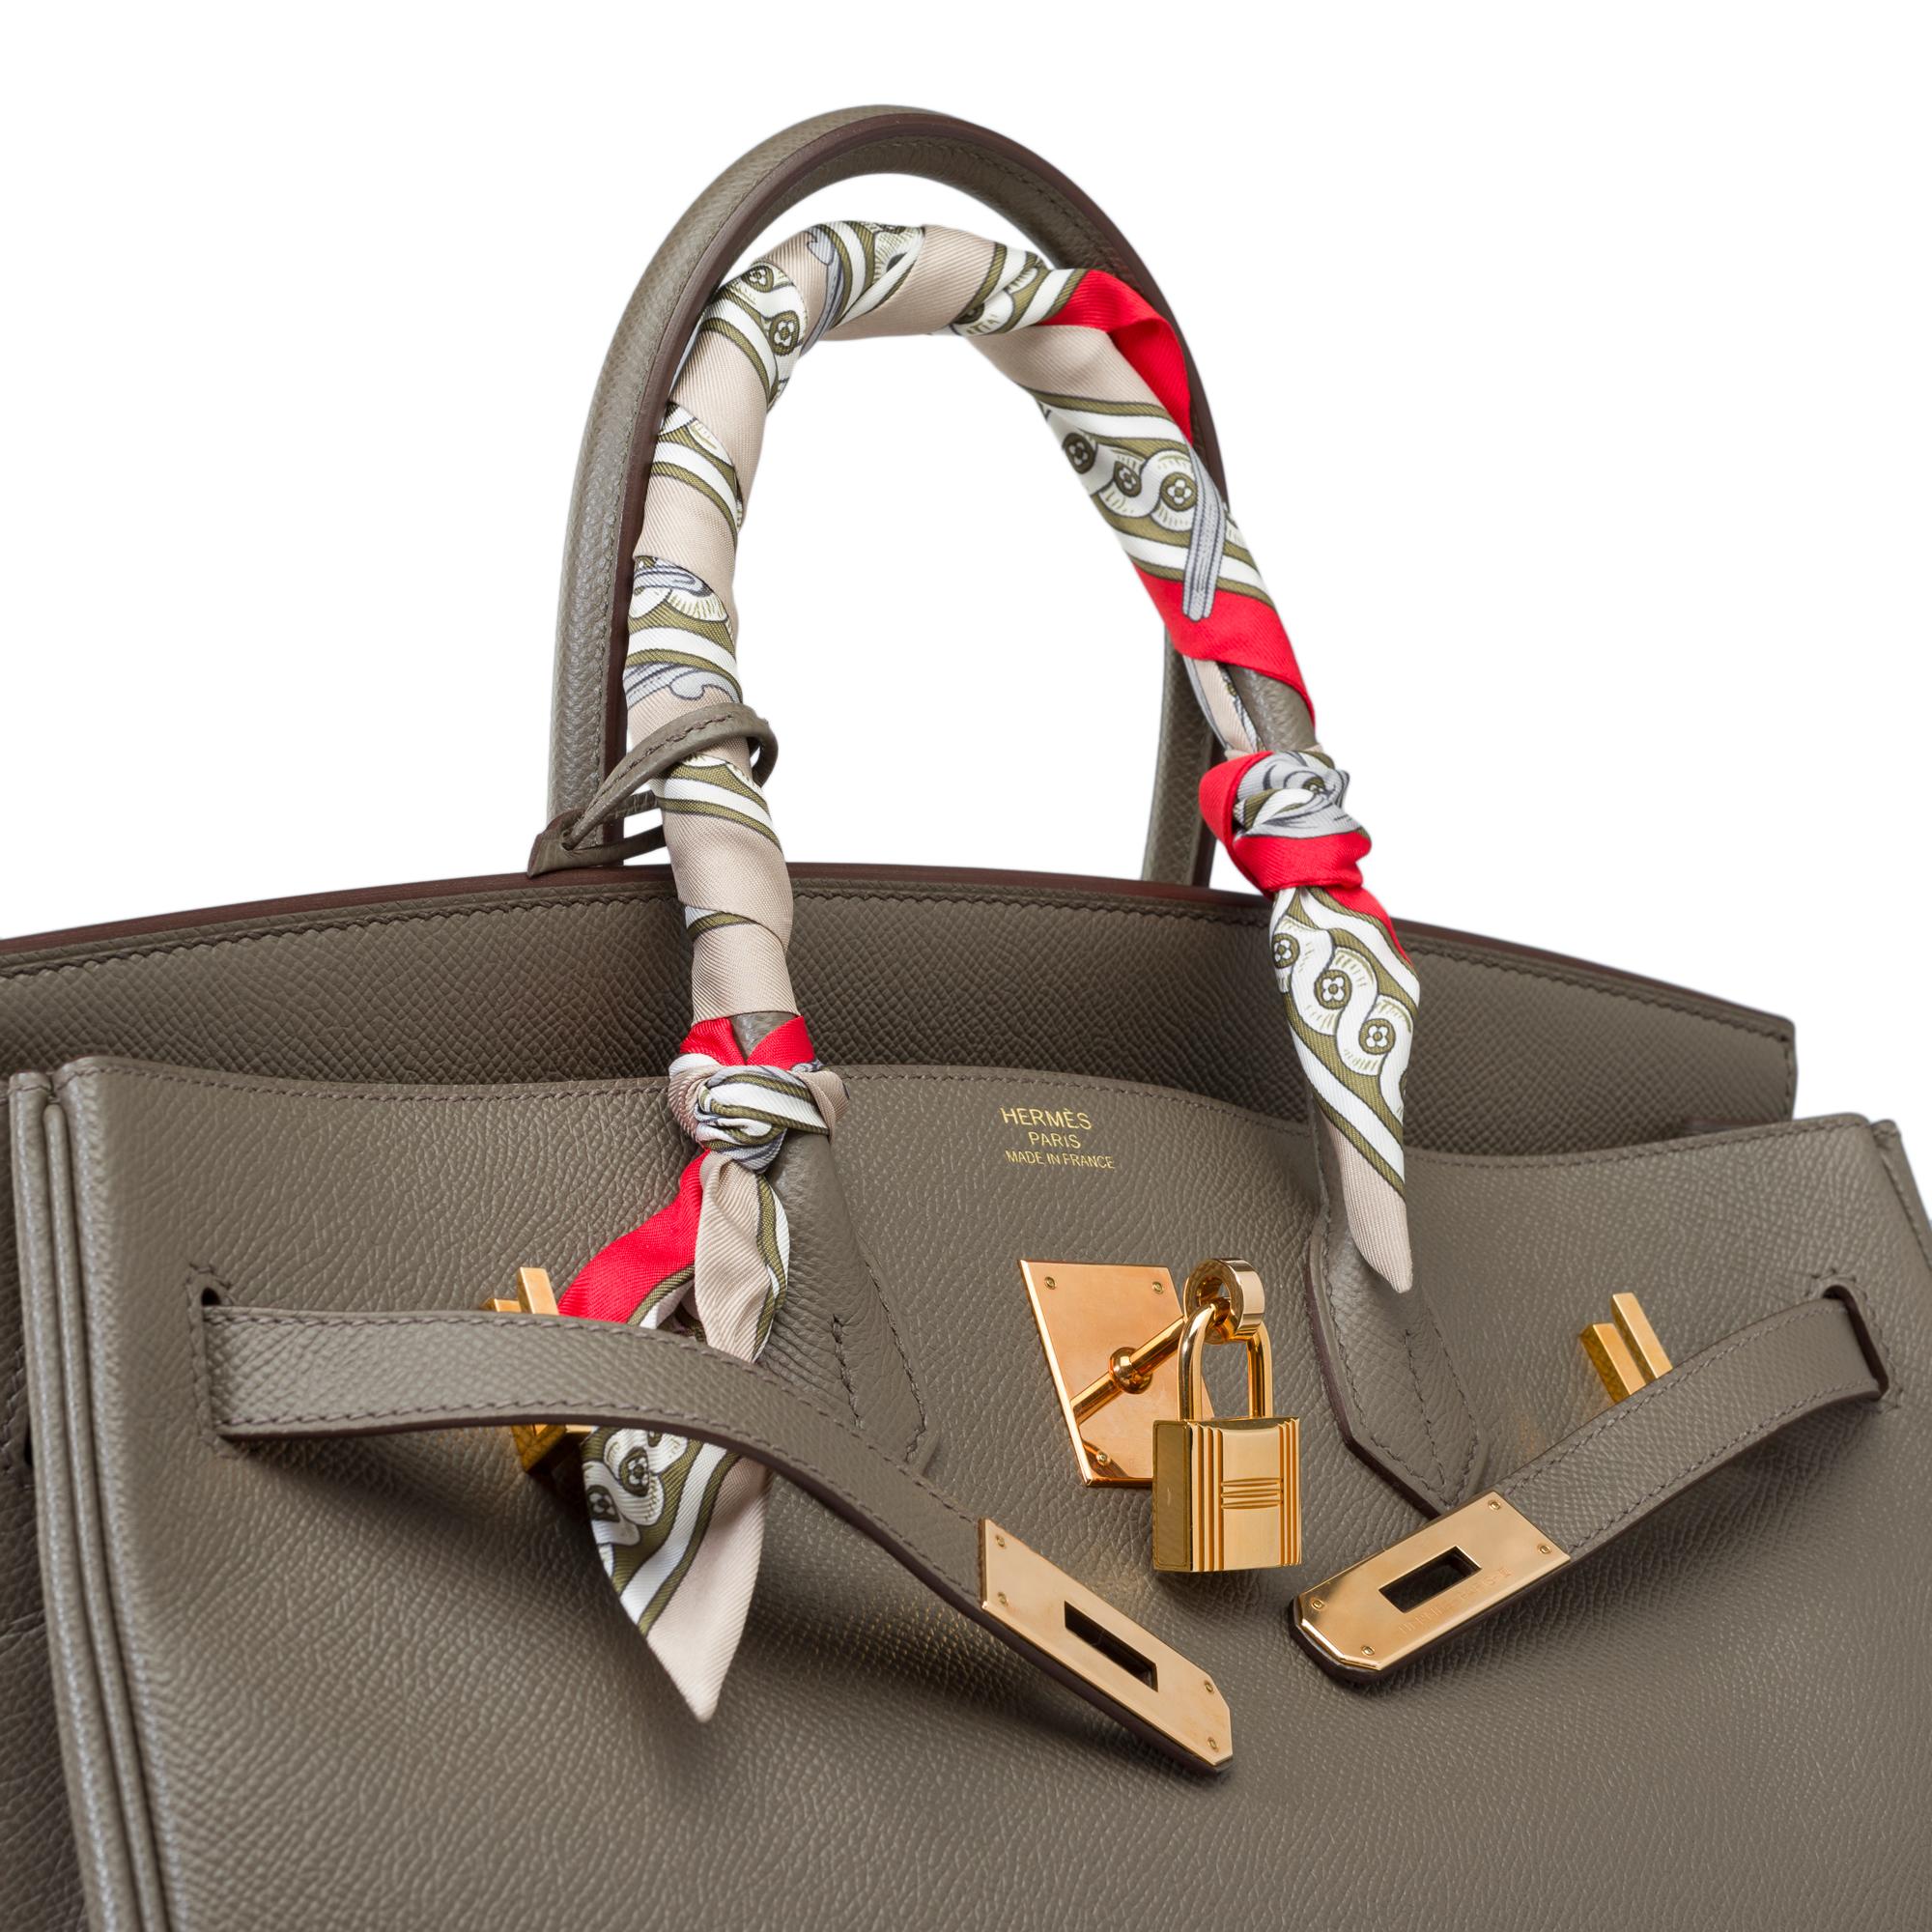 Stunning Hermès Birkin 35 handbag in etoupe Epsom leather, RGHW For Sale 3